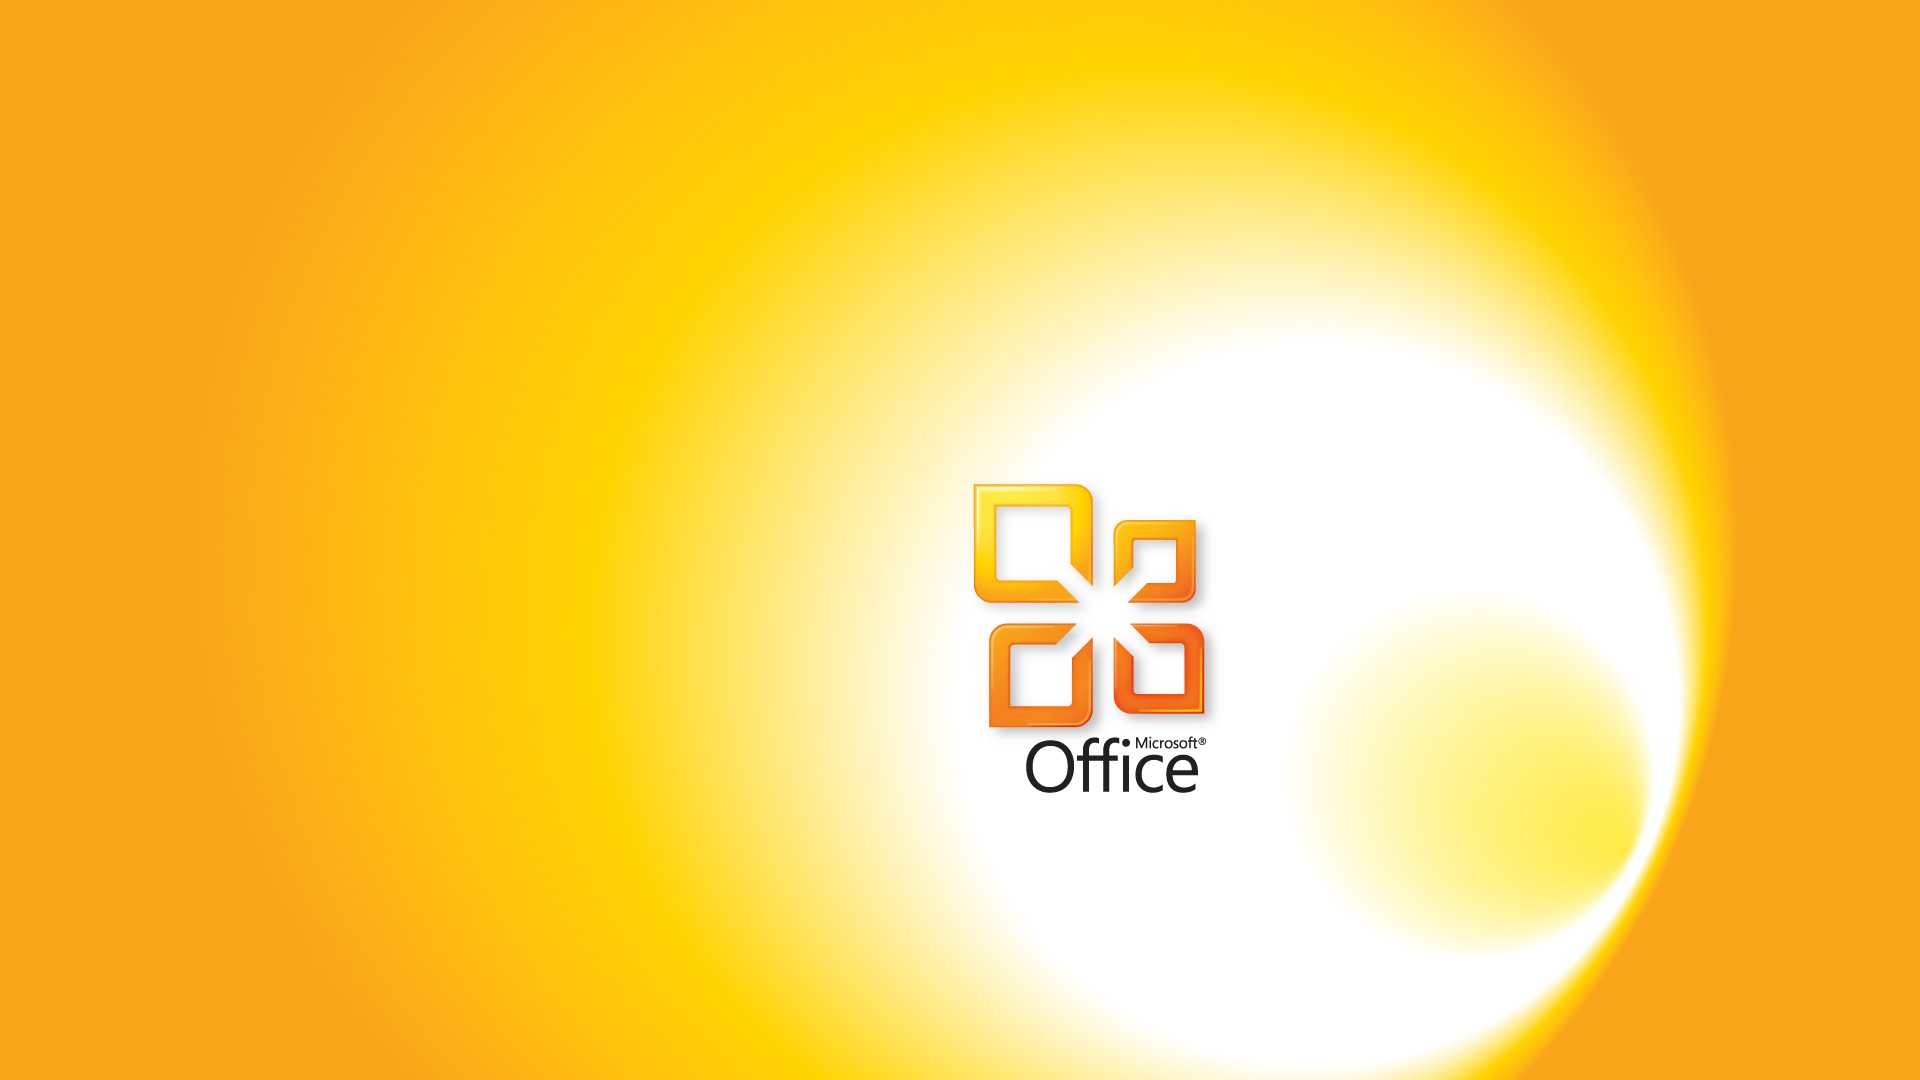 Microsoft Office Background - HD Wallpaper 